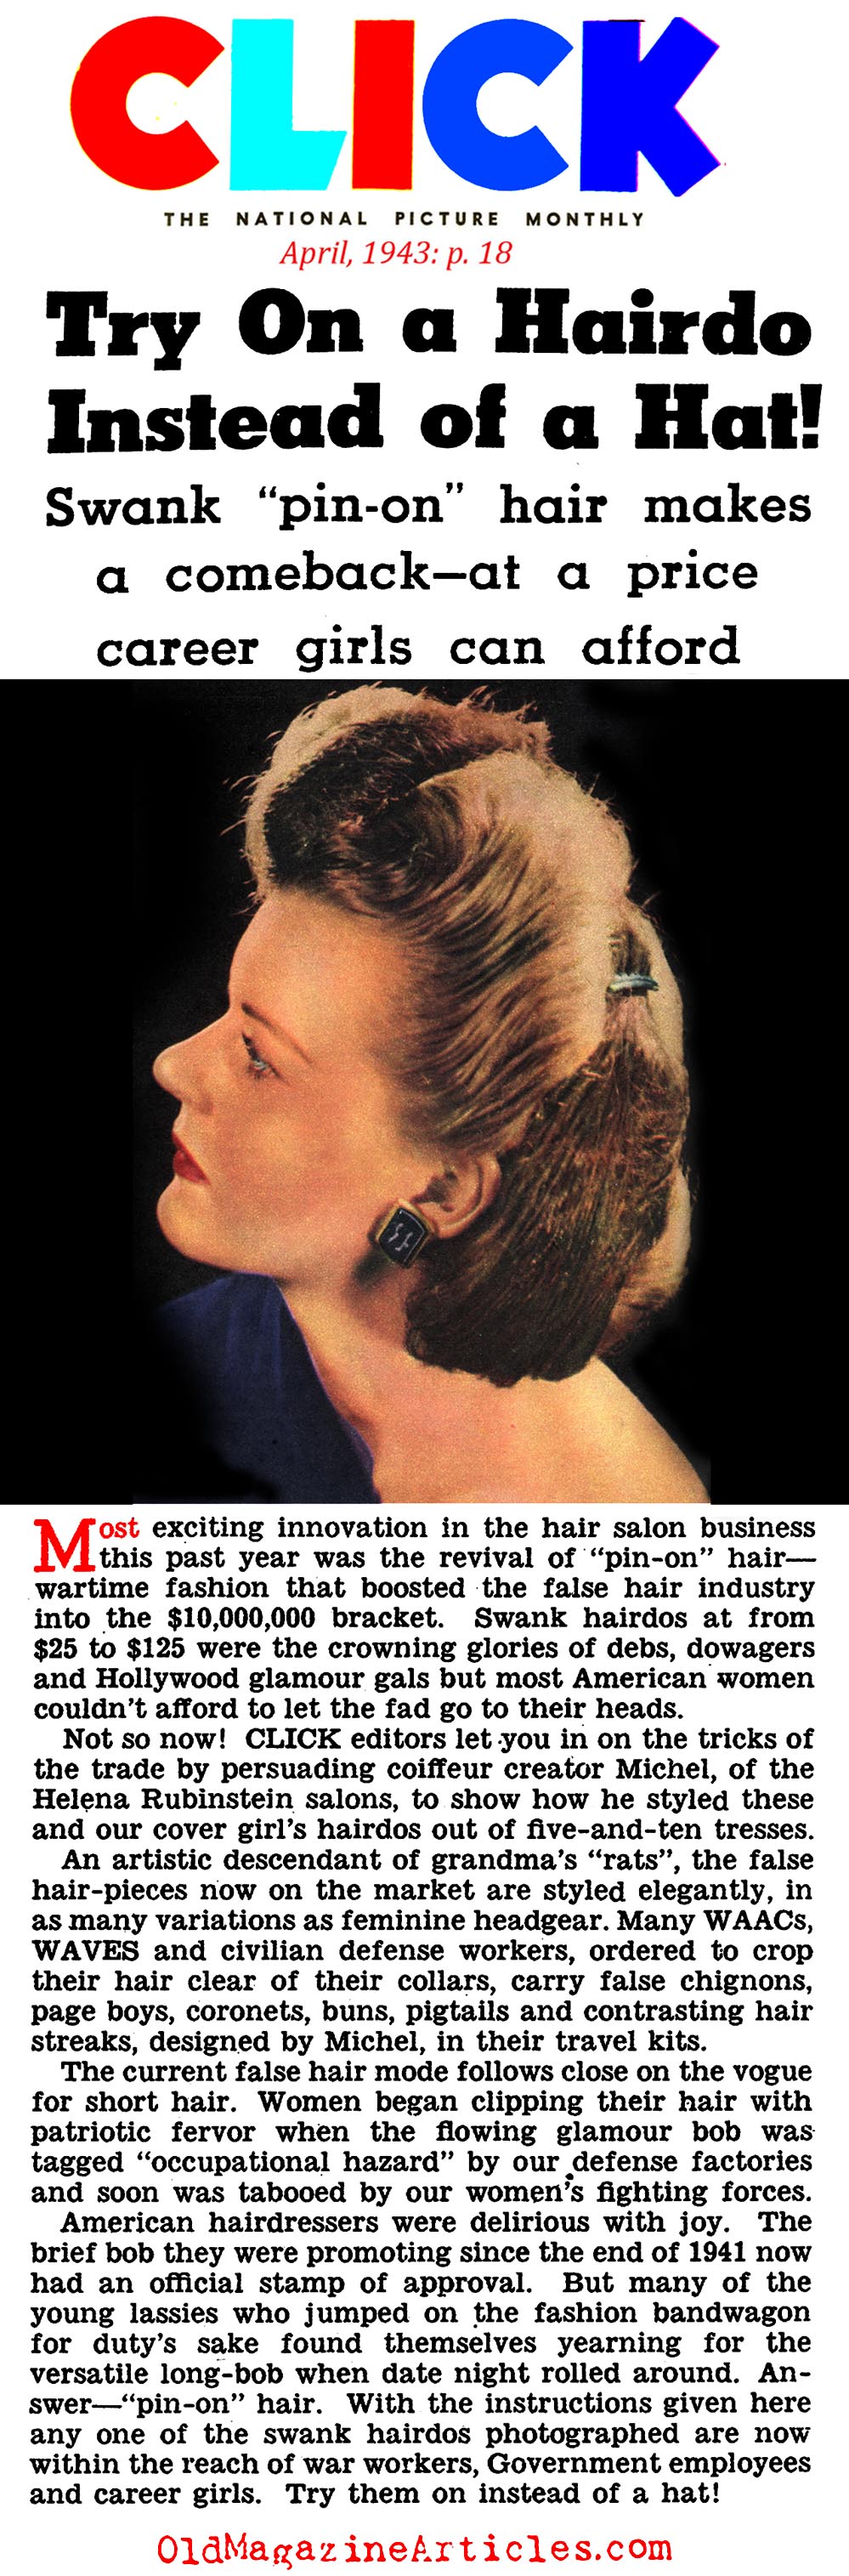 The Pin-On Hairdo: White Trash Triumph (Click Mahazine, 1943)